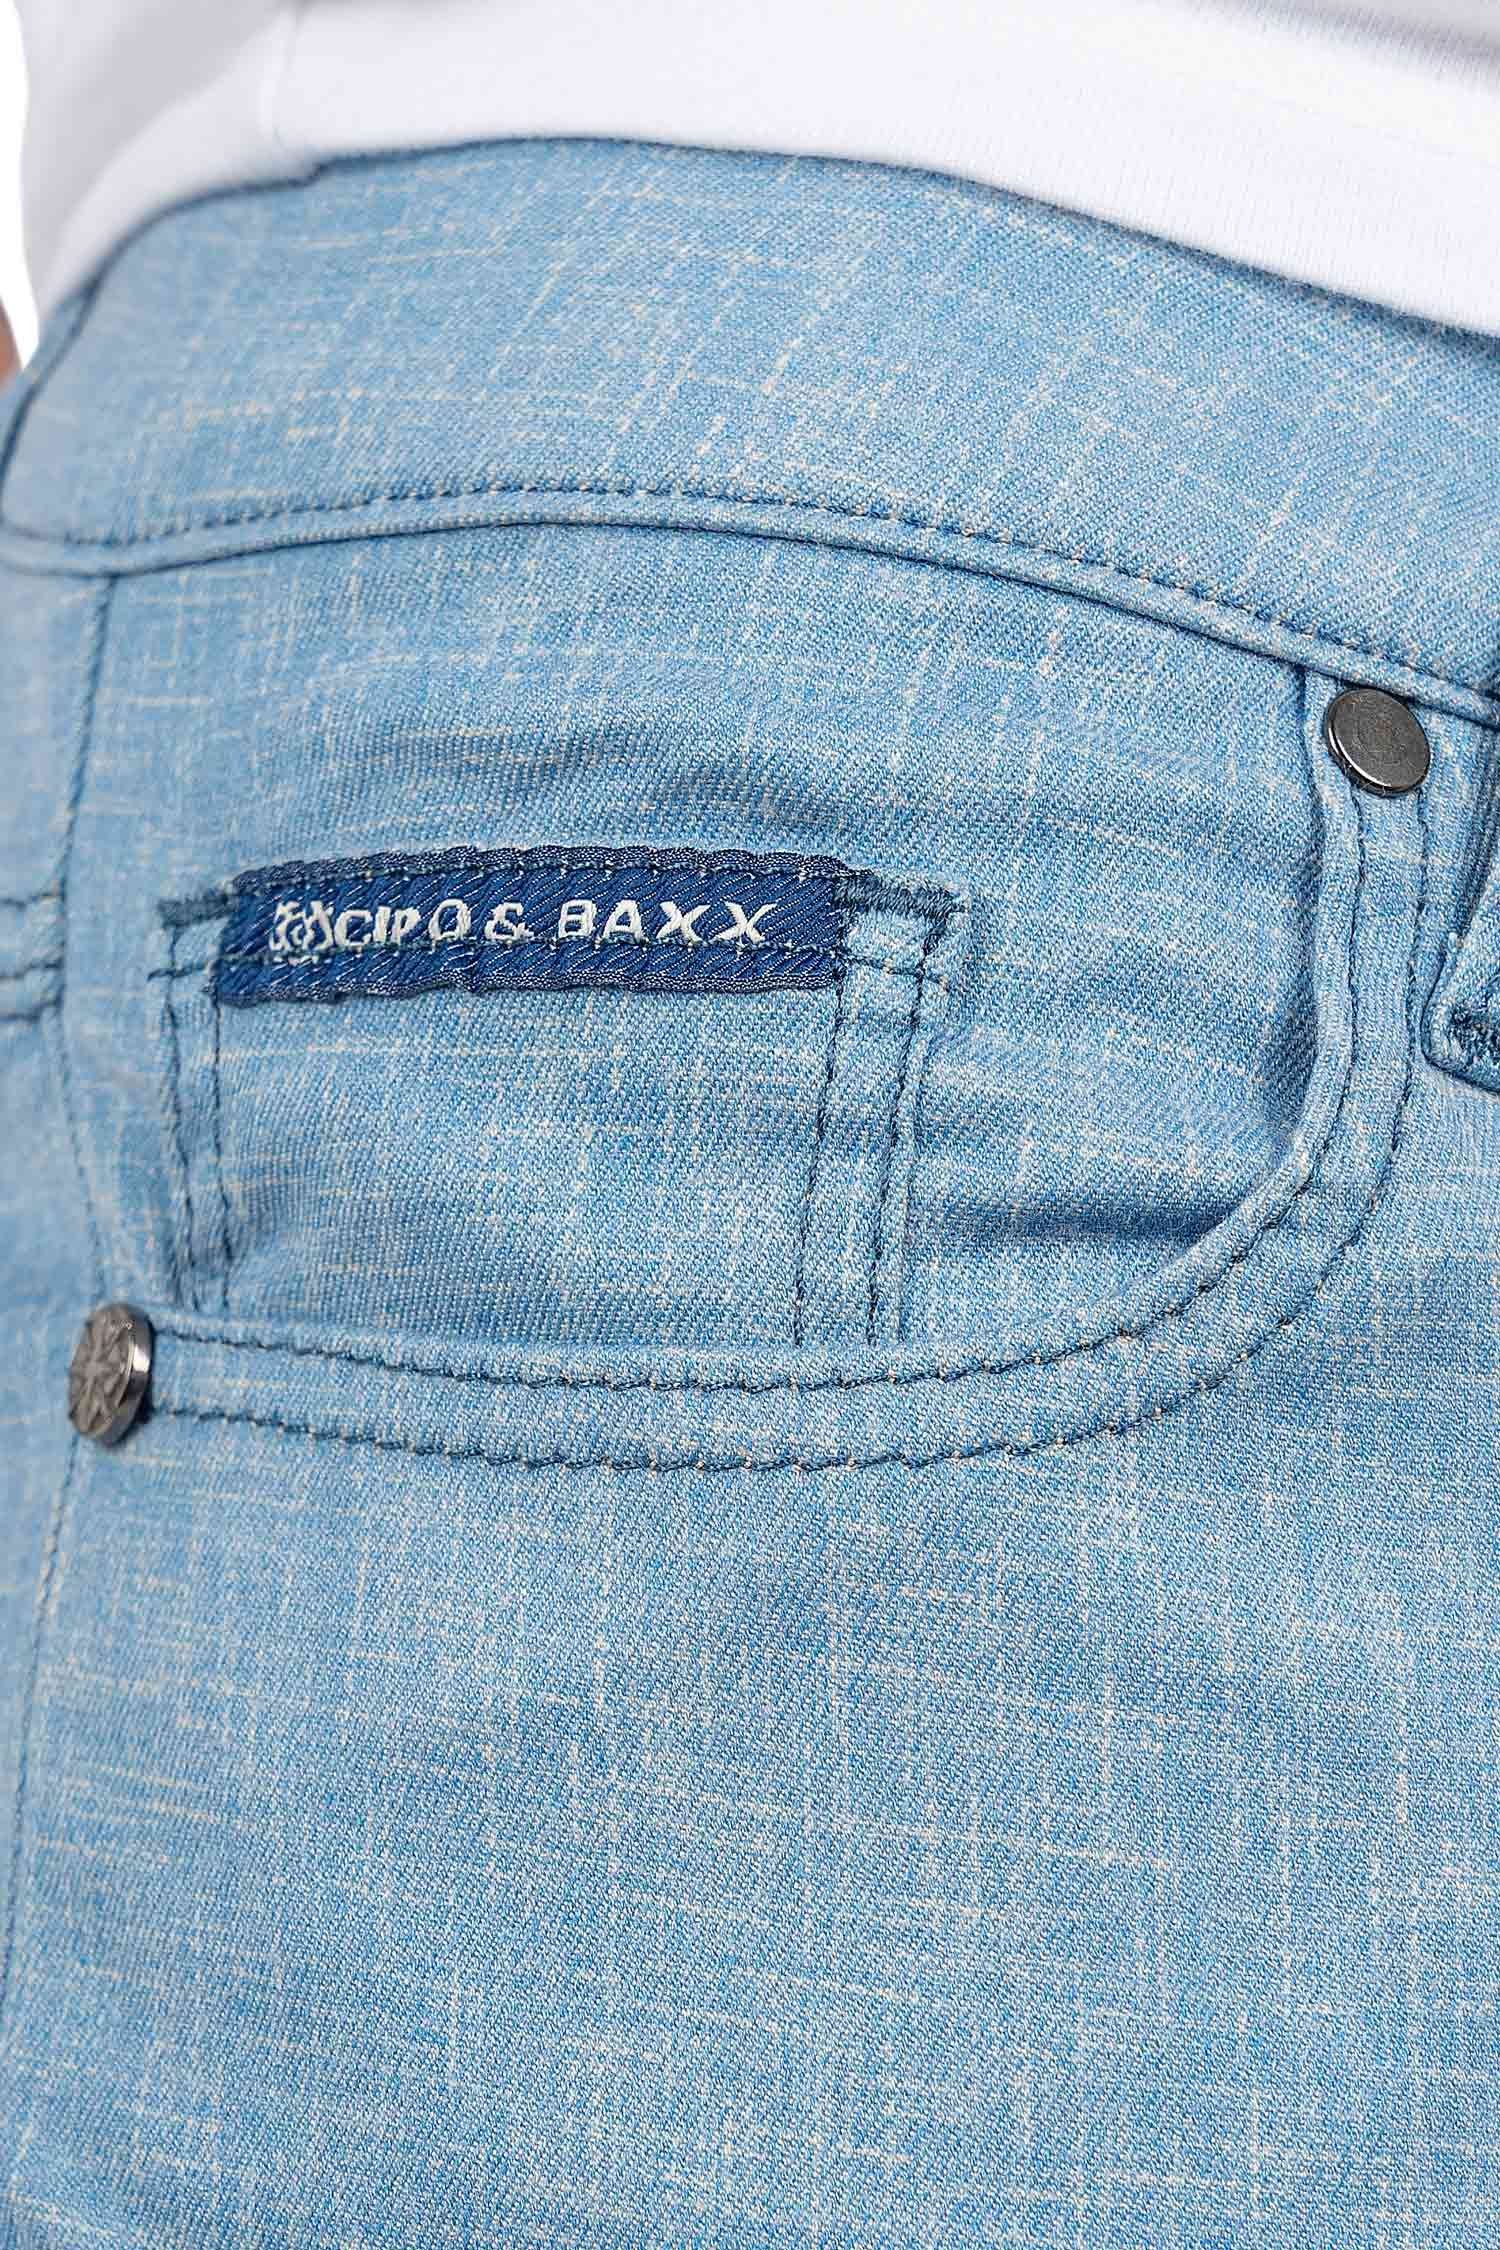 Baxx Urbanen BA-CD840 im Hose Stoffhose Cipo Look blau Elegante & Modernen